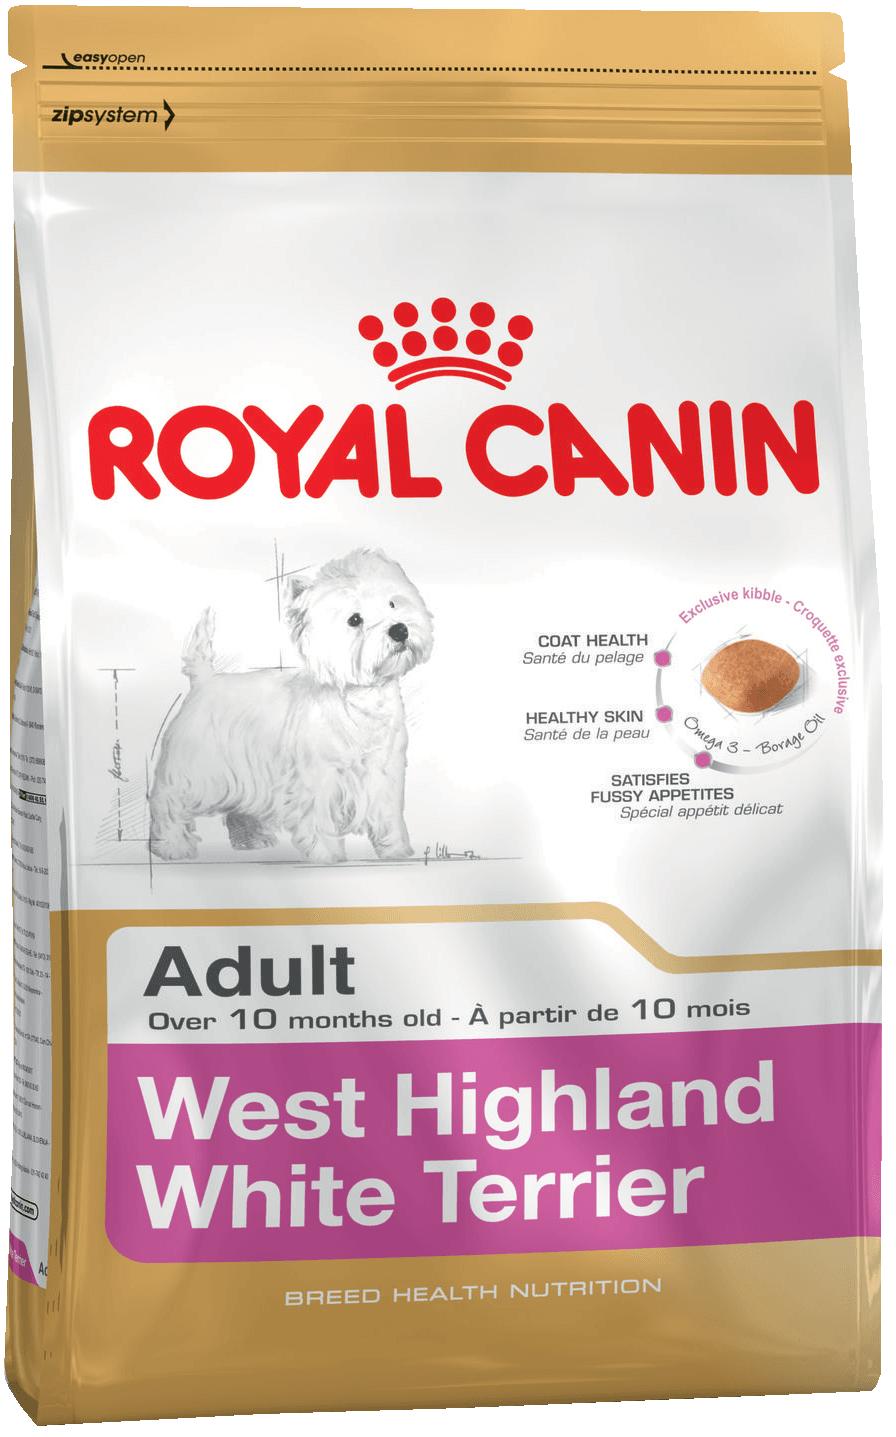 Royal Canin ВВА RC Для собак-Вест Хайленд Уайт Терьера: с 10мес. (Westie 21) 39810150P039810150F0 1,5 кг 12353